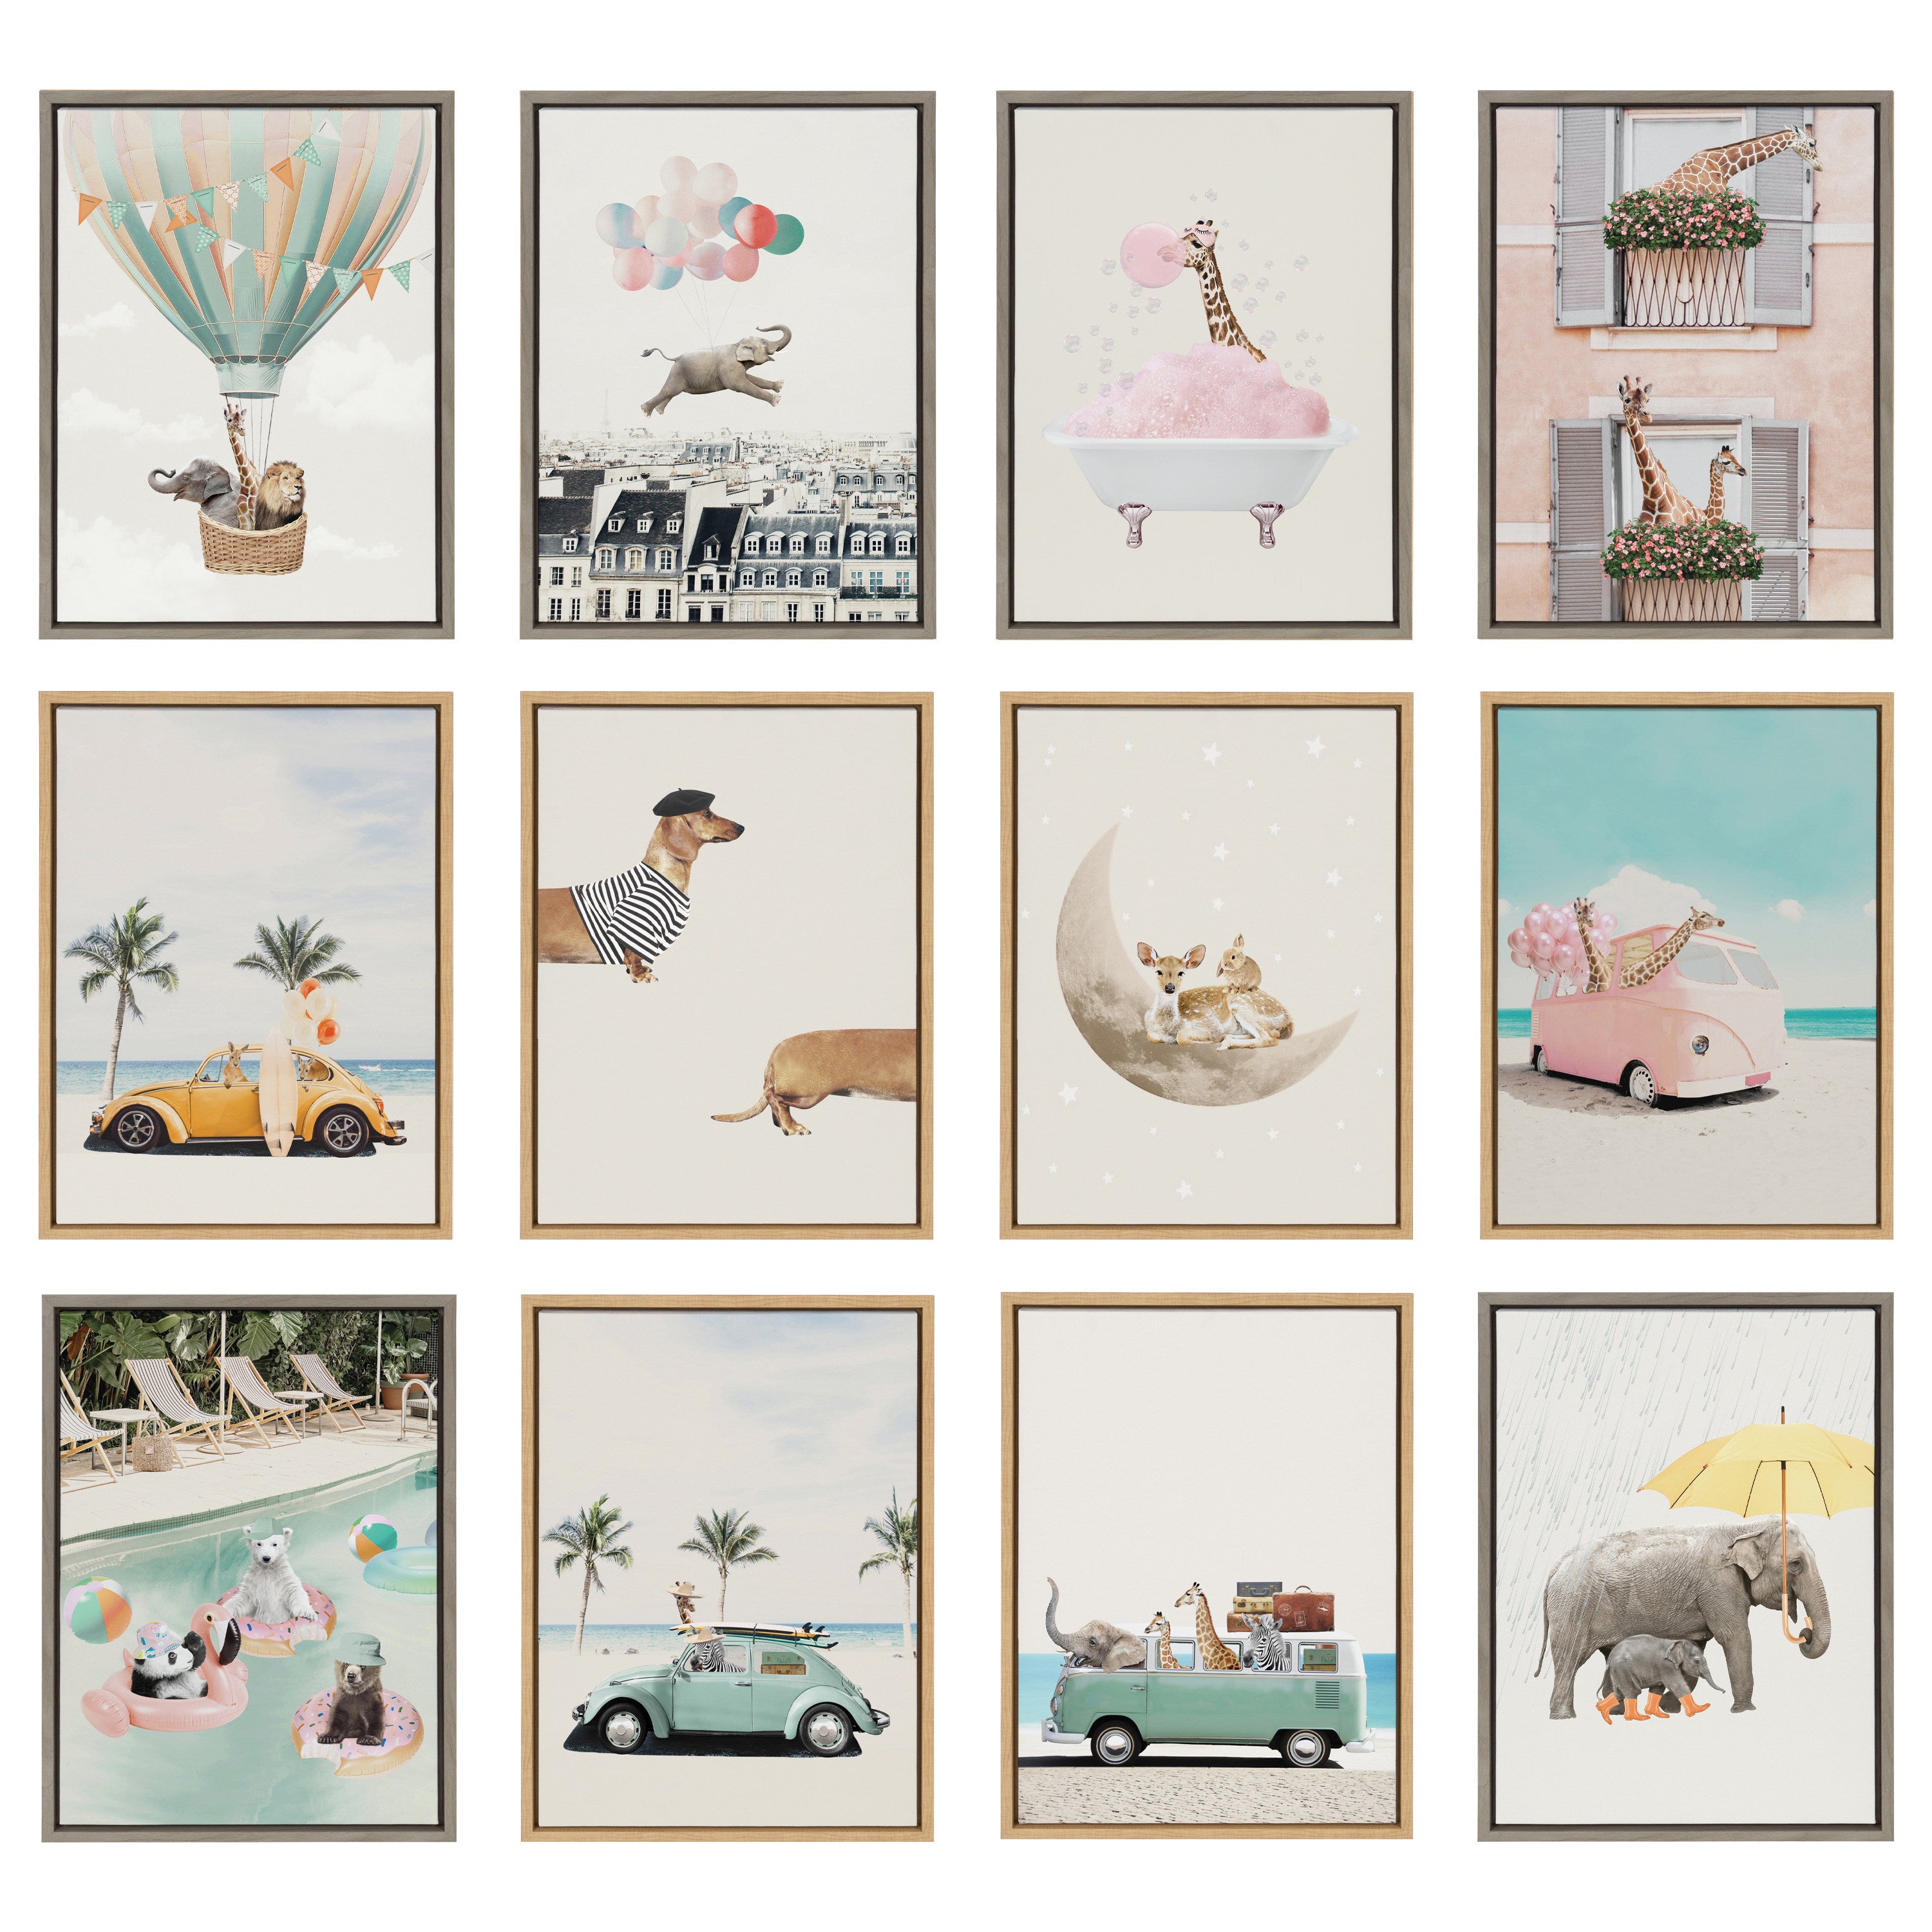 Sylvie Beach Adventures Framed Canvas by July Art Prints